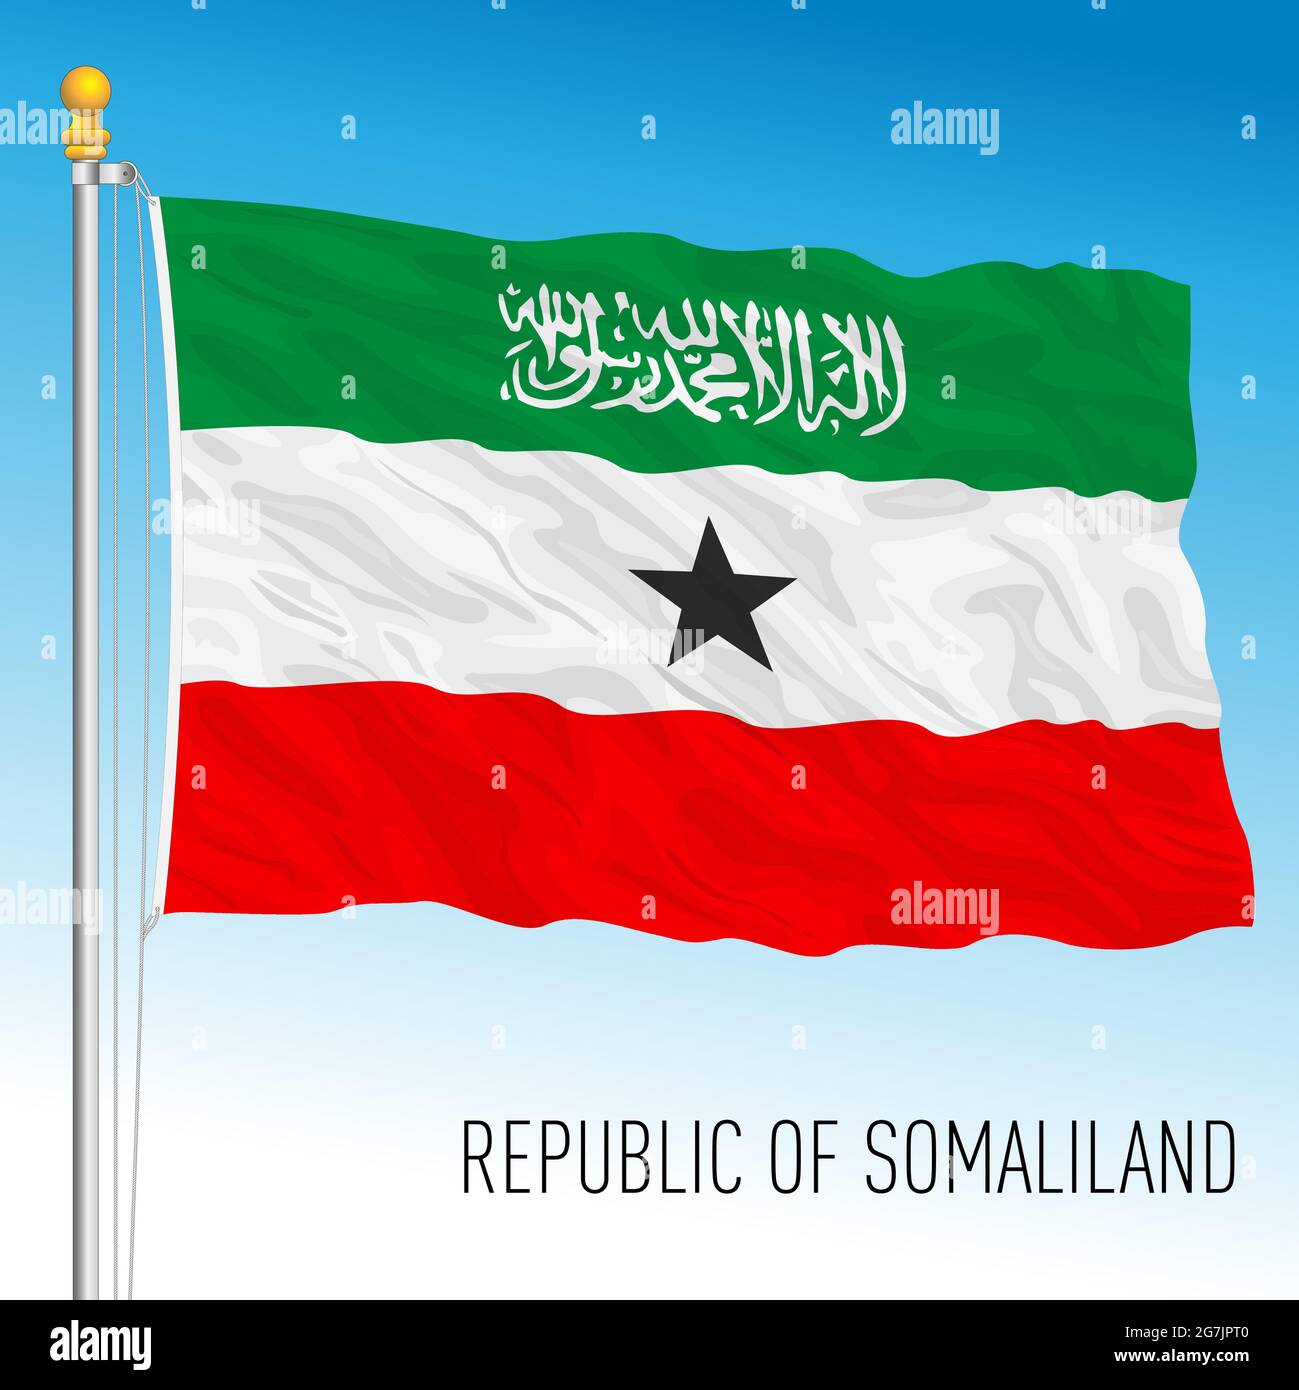 Somaliland offizielle Nationalflagge, afrikanisches Land, Vektorgrafik Stock Vektor